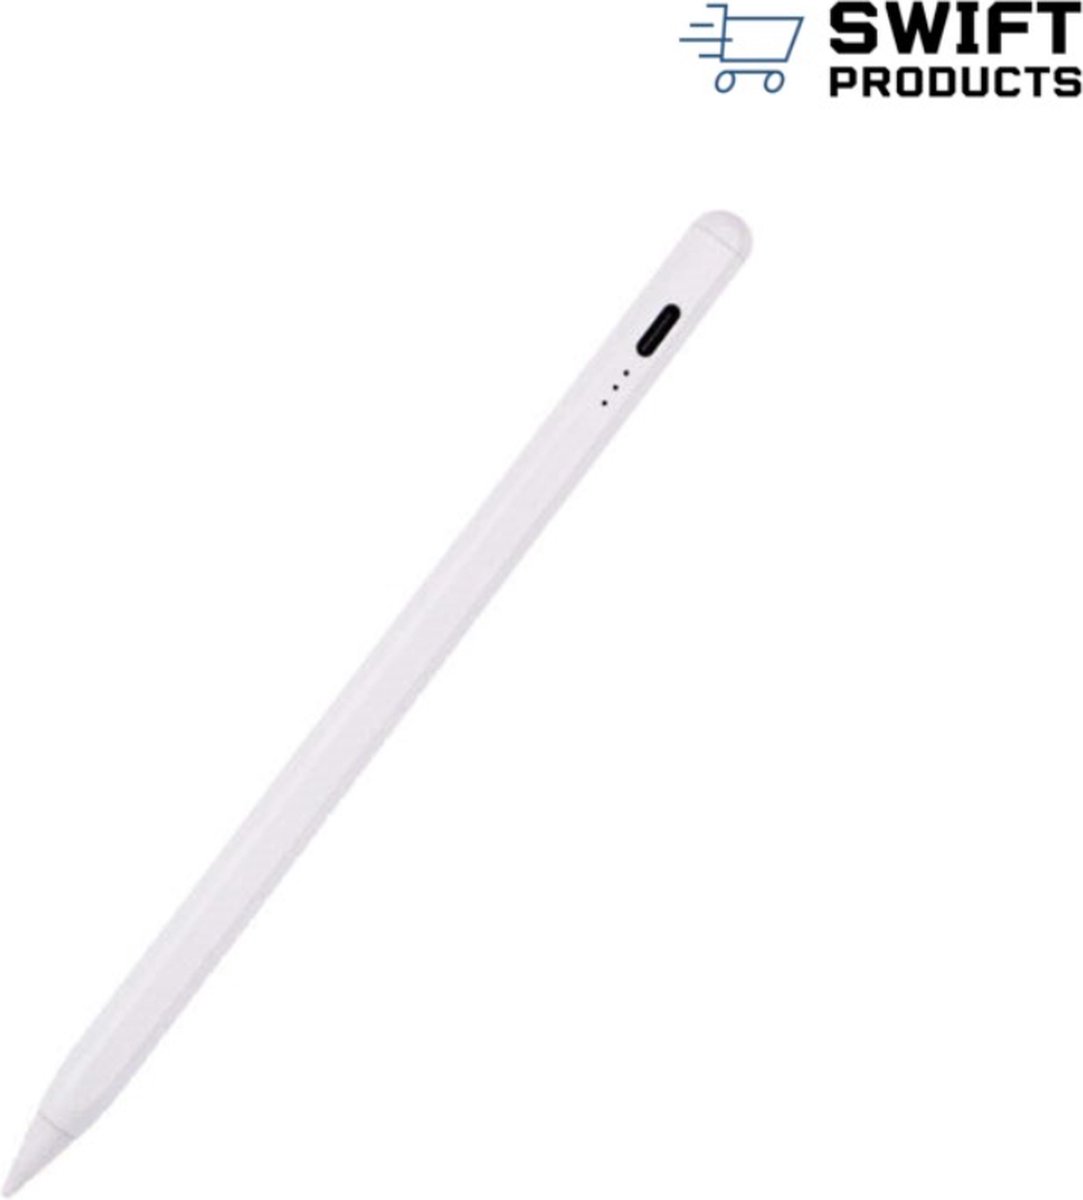 Swift Products Stylus Pen Pro - Alternatief Apple Pencil en Universele Stylus - Met Handdetectie - Wit - Stylus pen ipad - Stylus pen tablet - Voor tablet